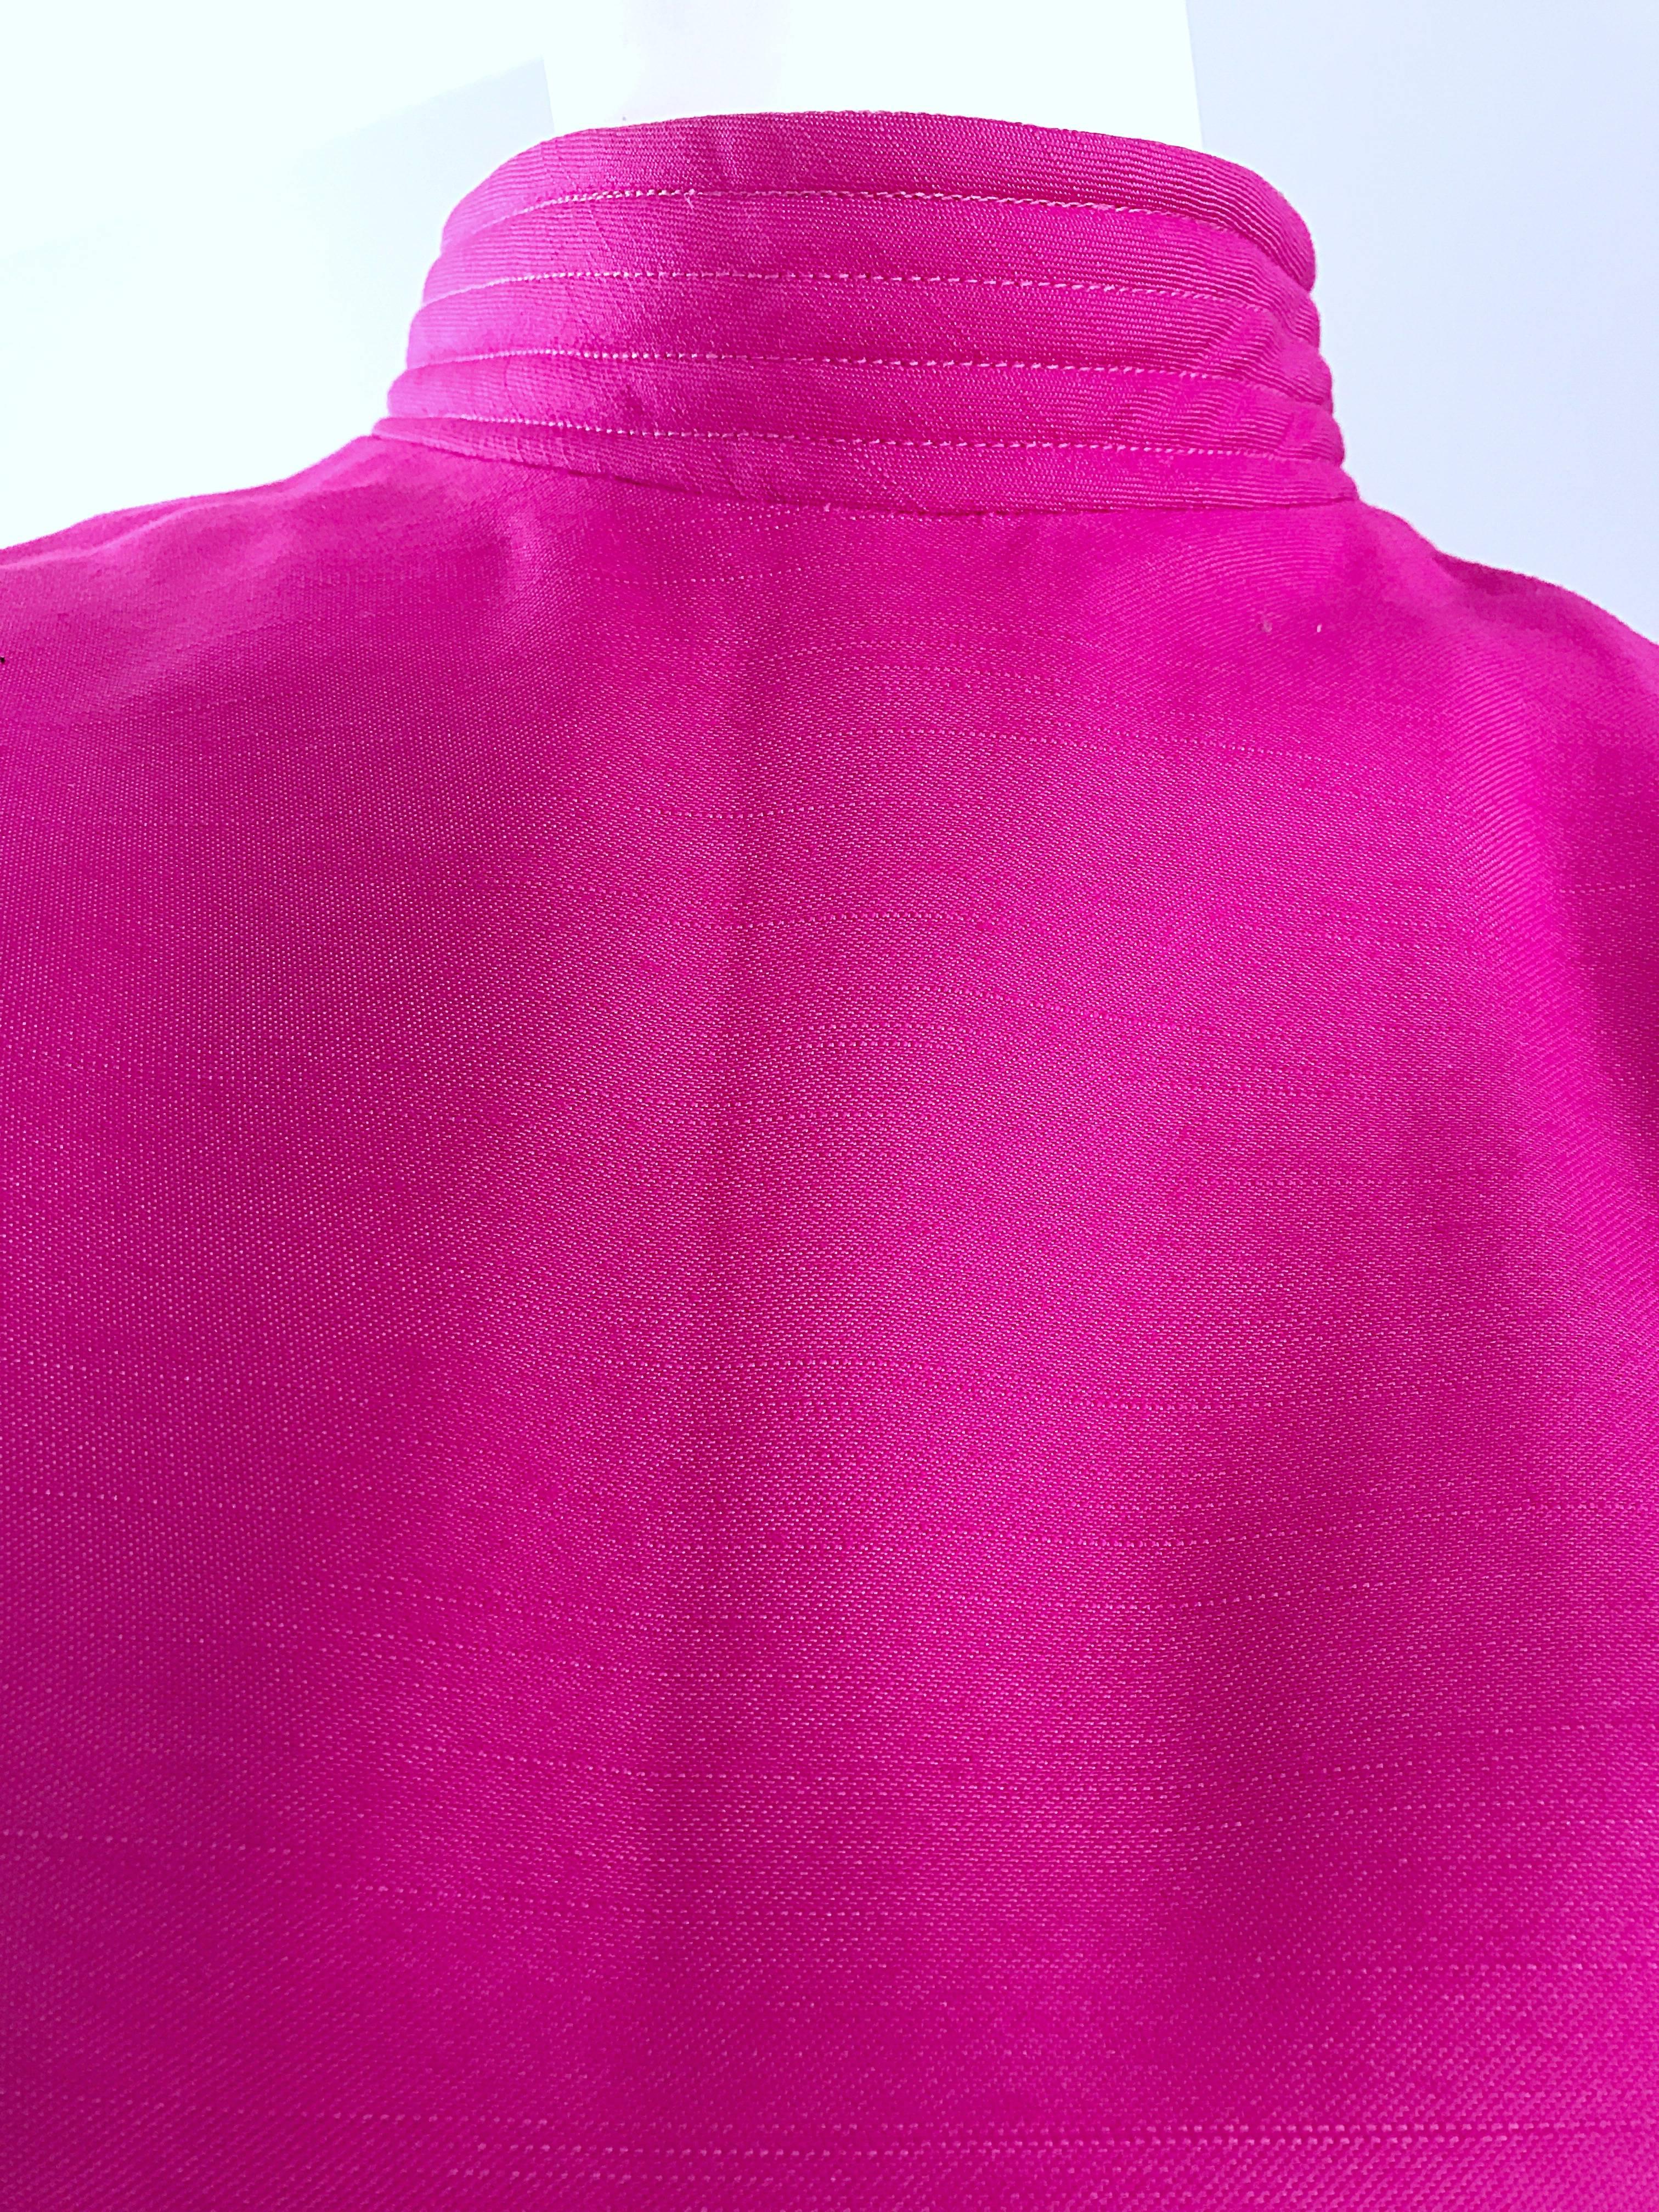 hot pink sleeveless dress